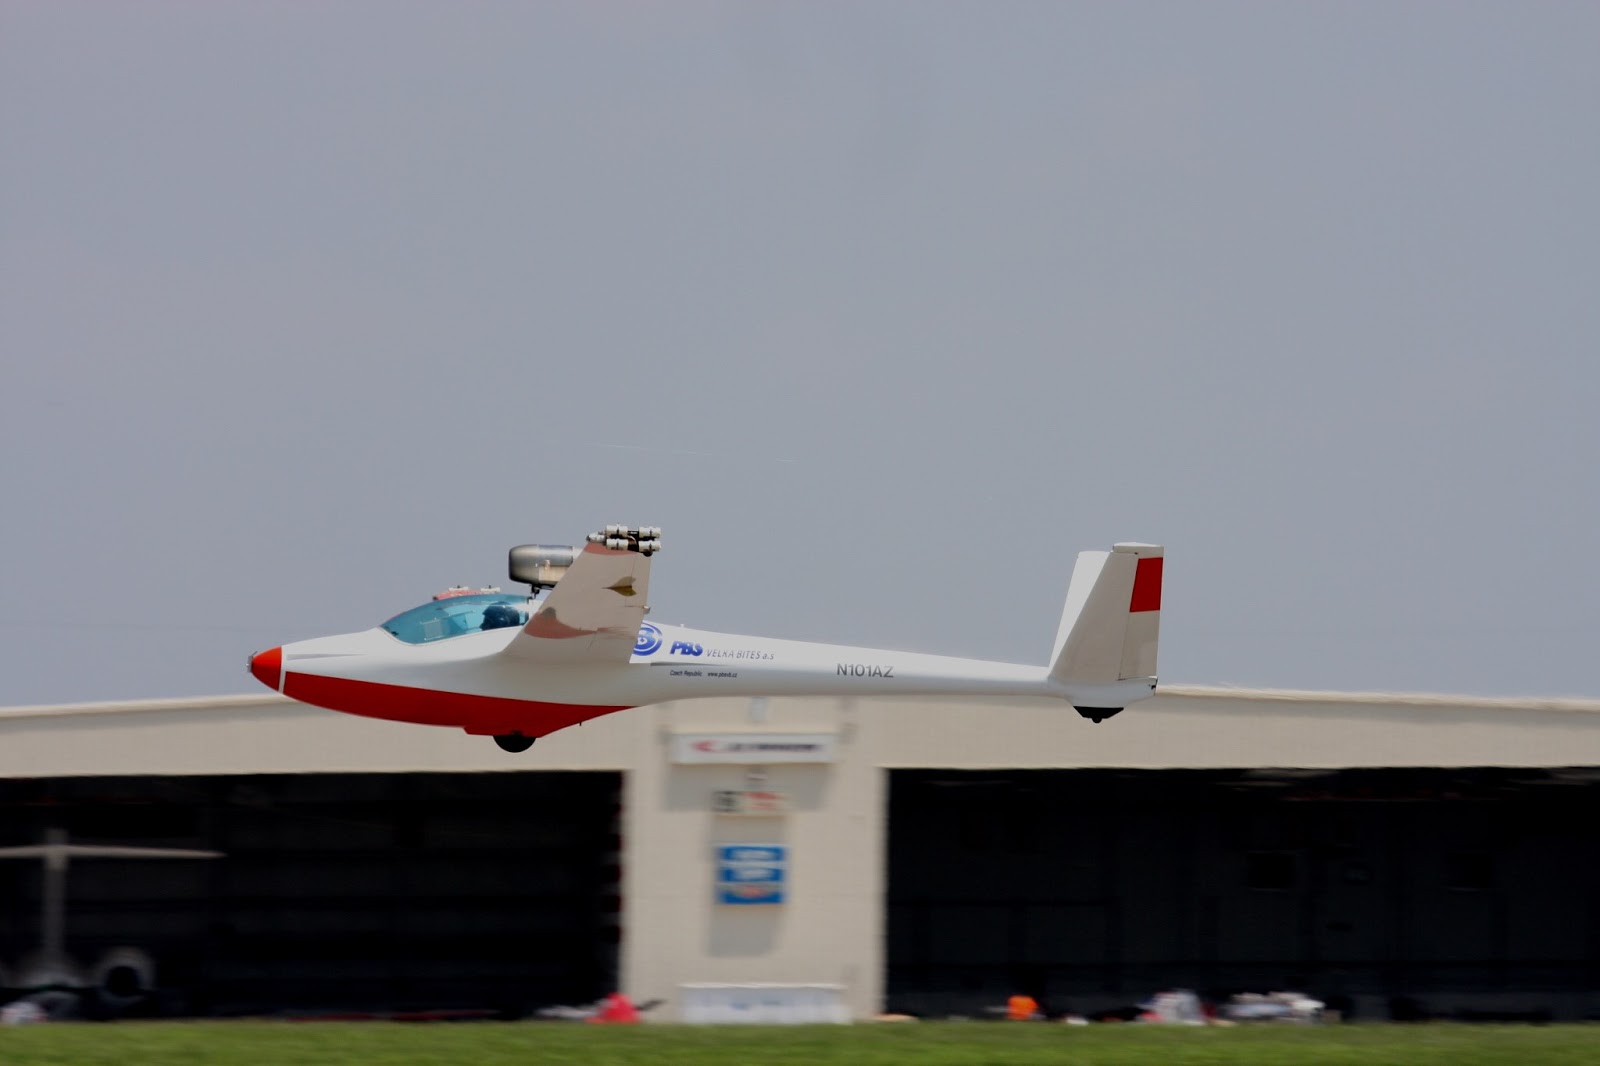 Bob Carlton and the Super Salto gliding into air show, News